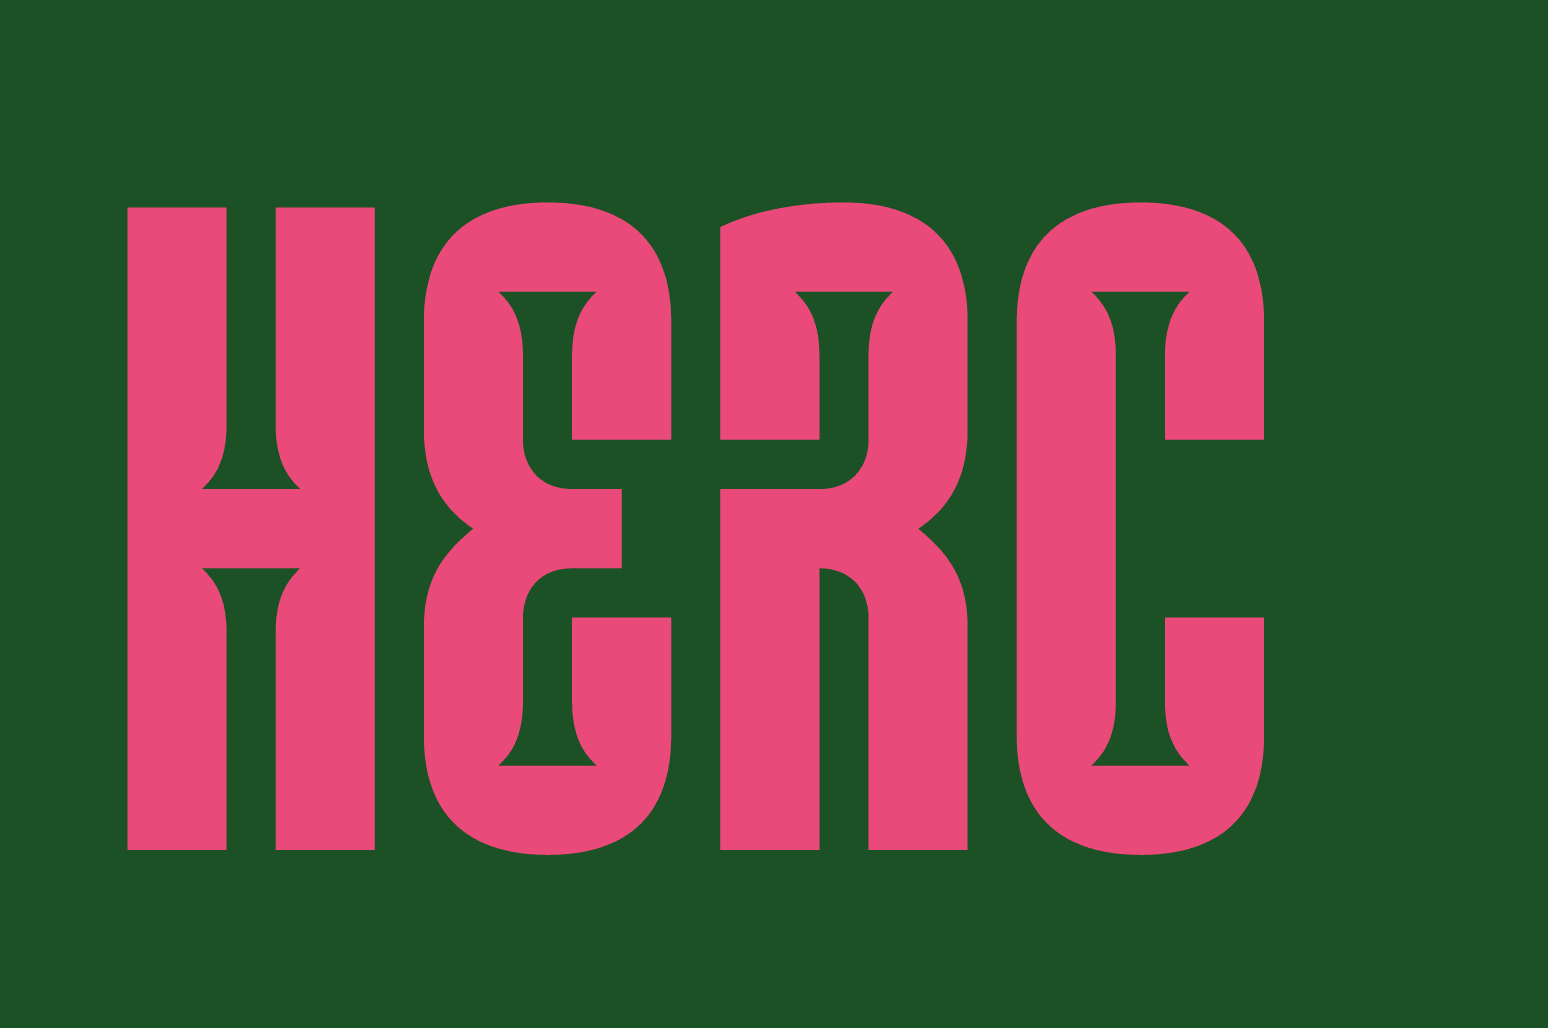 HERC The Agency